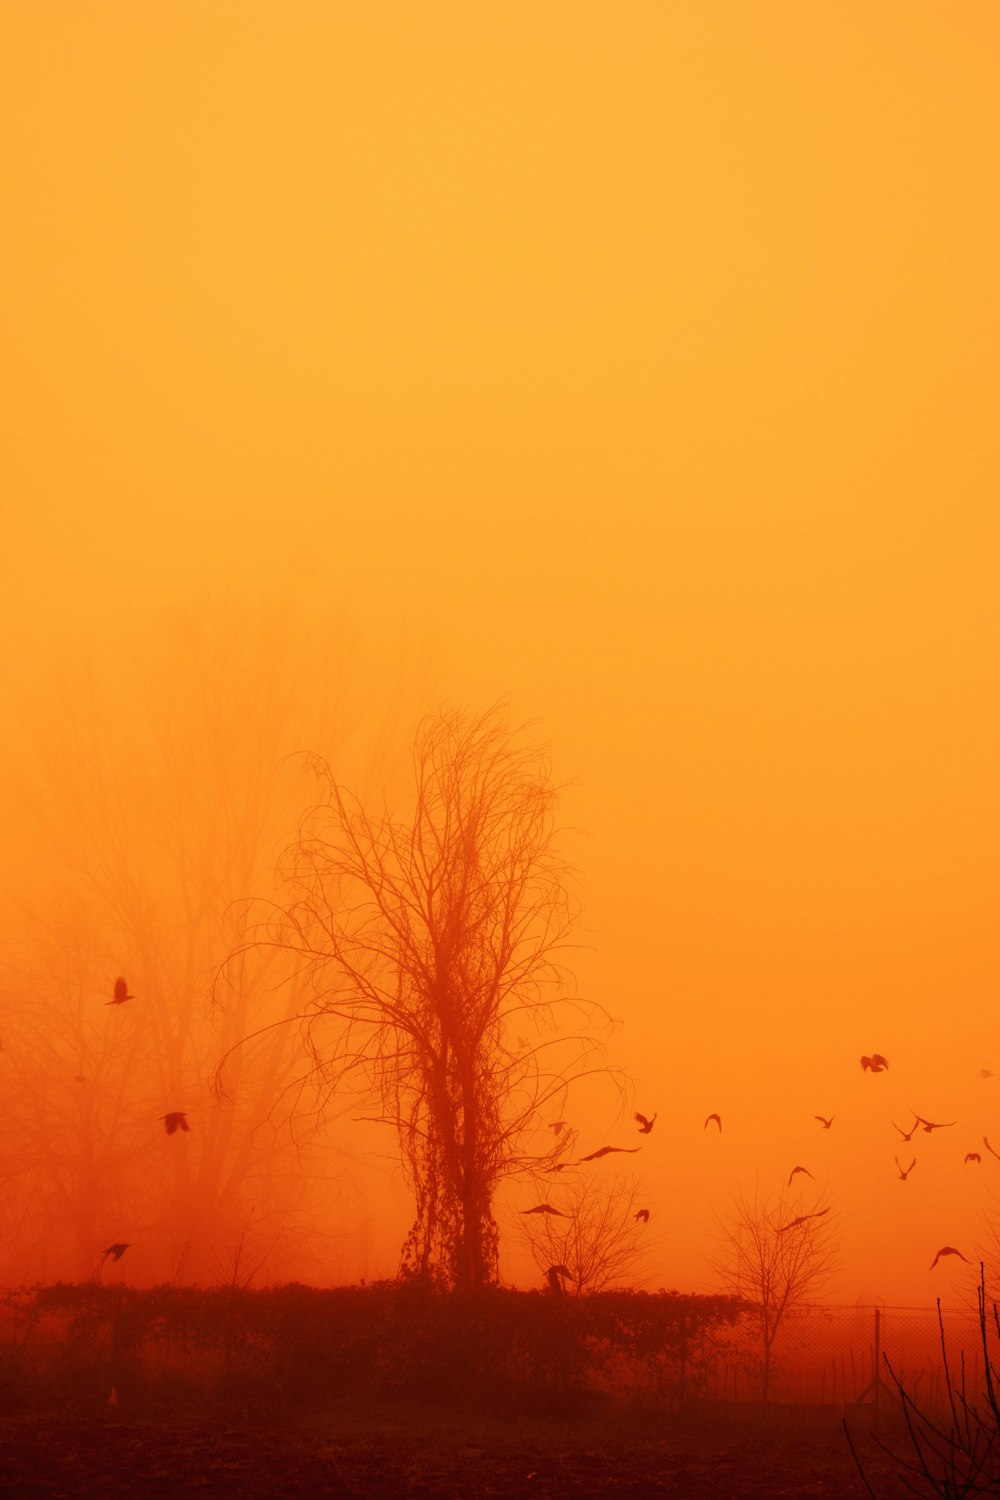 a flock of birds flying over a foggy field